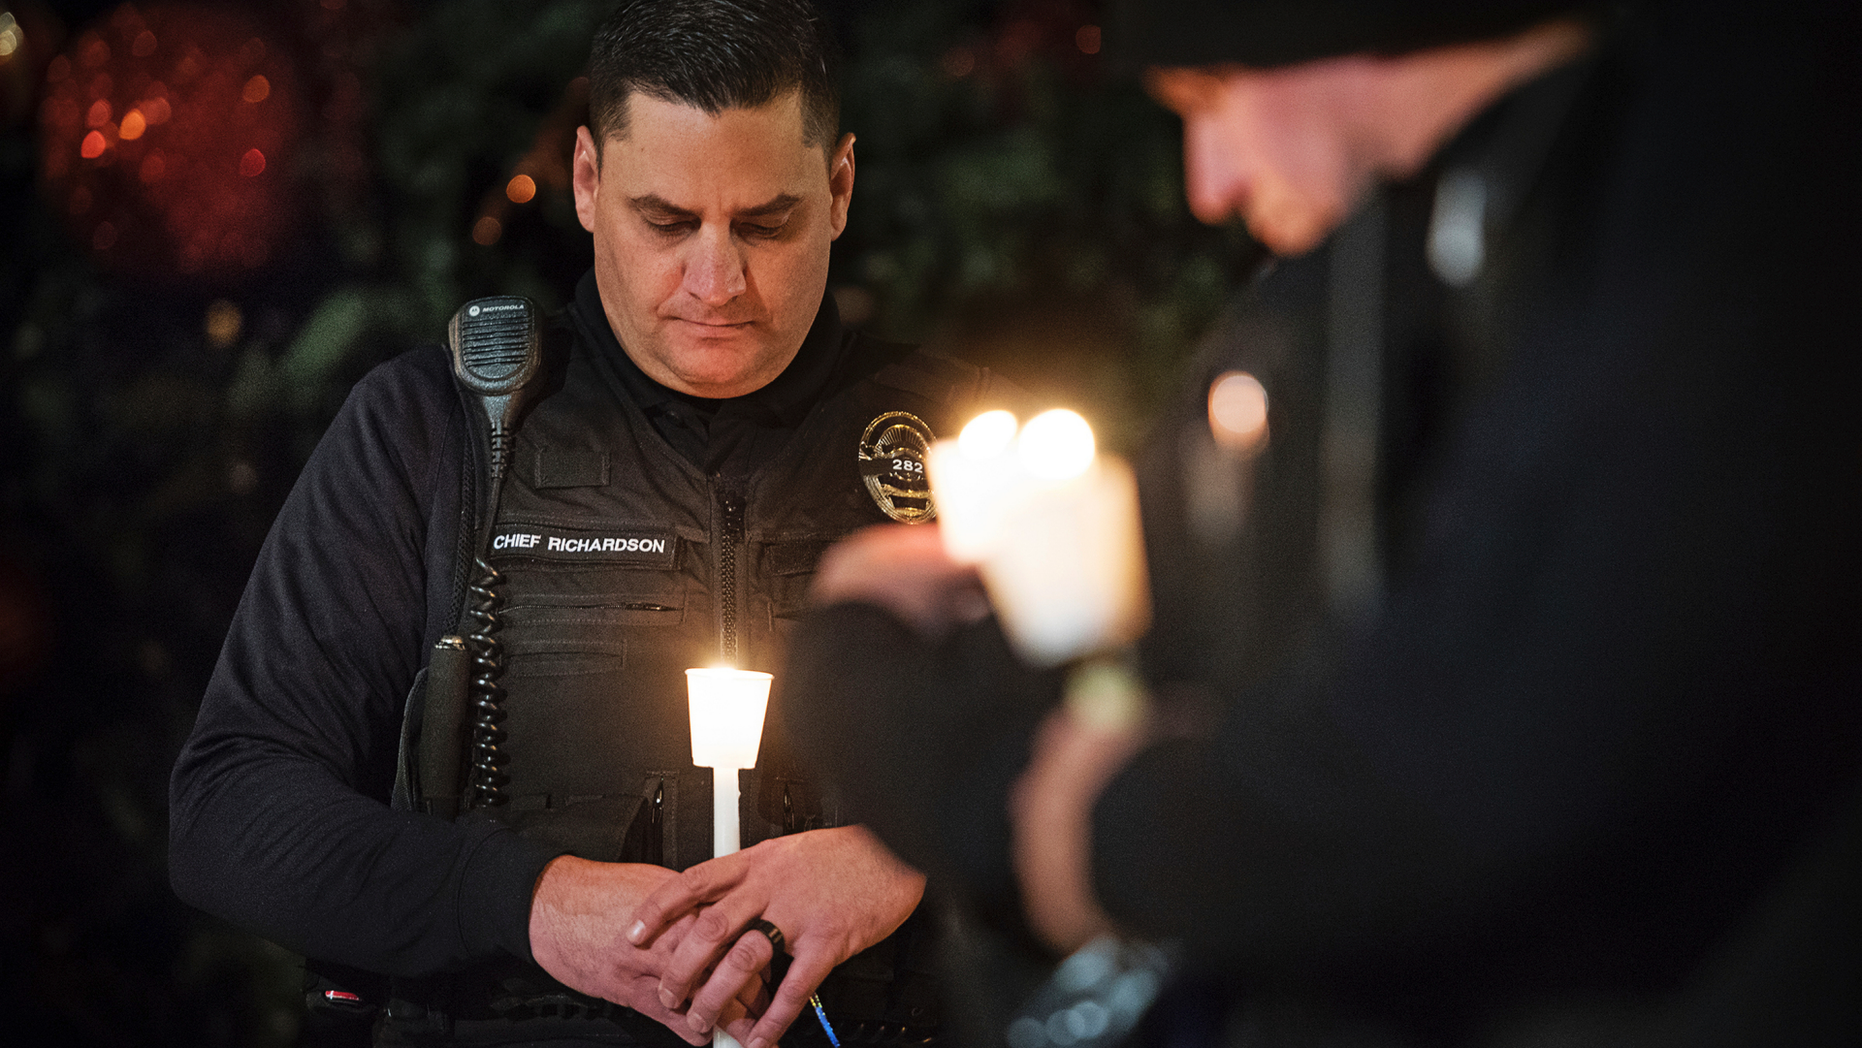 Funeral will be held in California for slain police officer